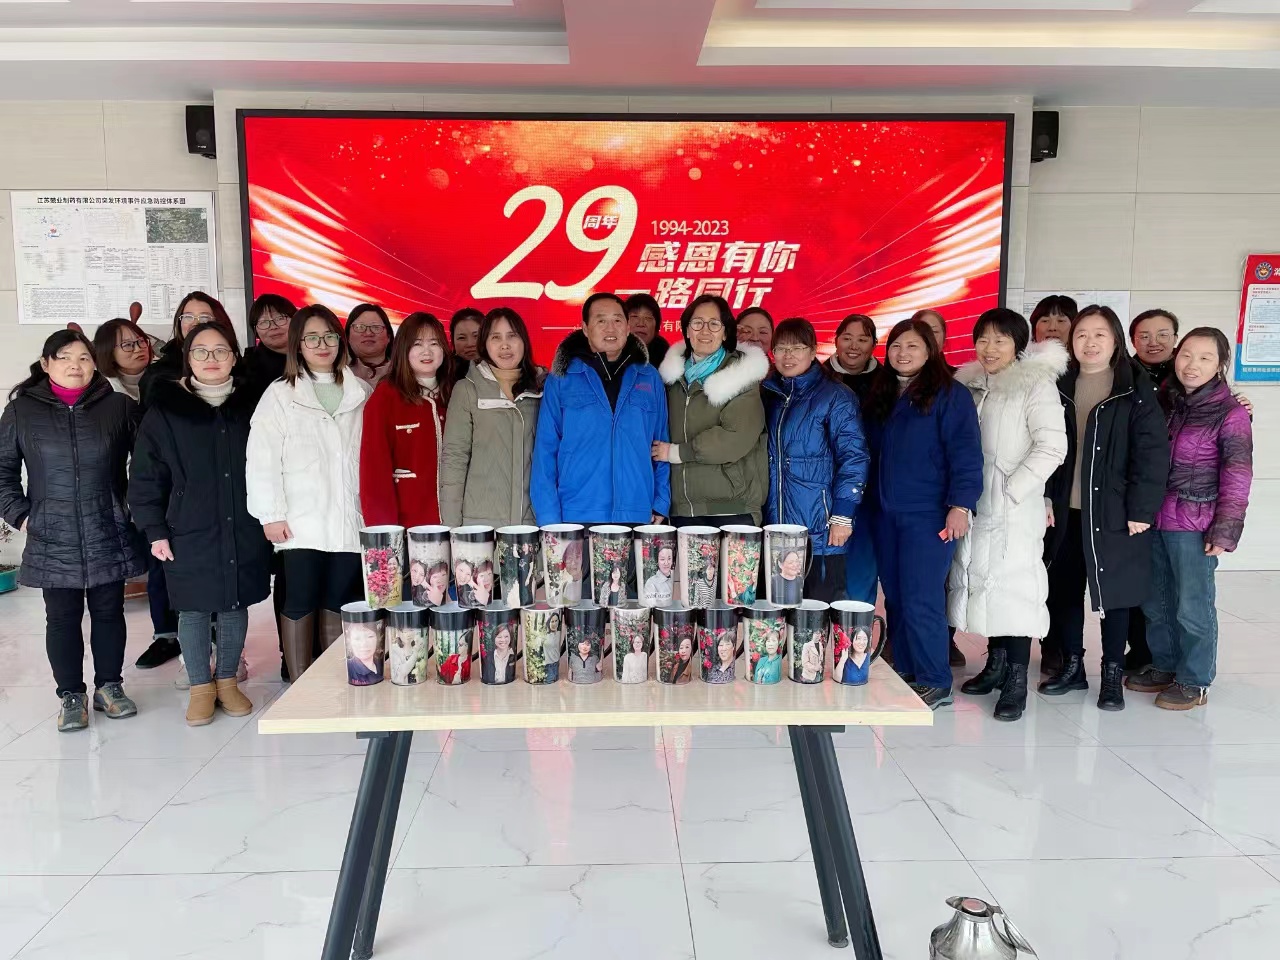 Warm congratulations to Jiangsu Jingye Pharmaceutical Co., Ltd. on its 29th anniversary!